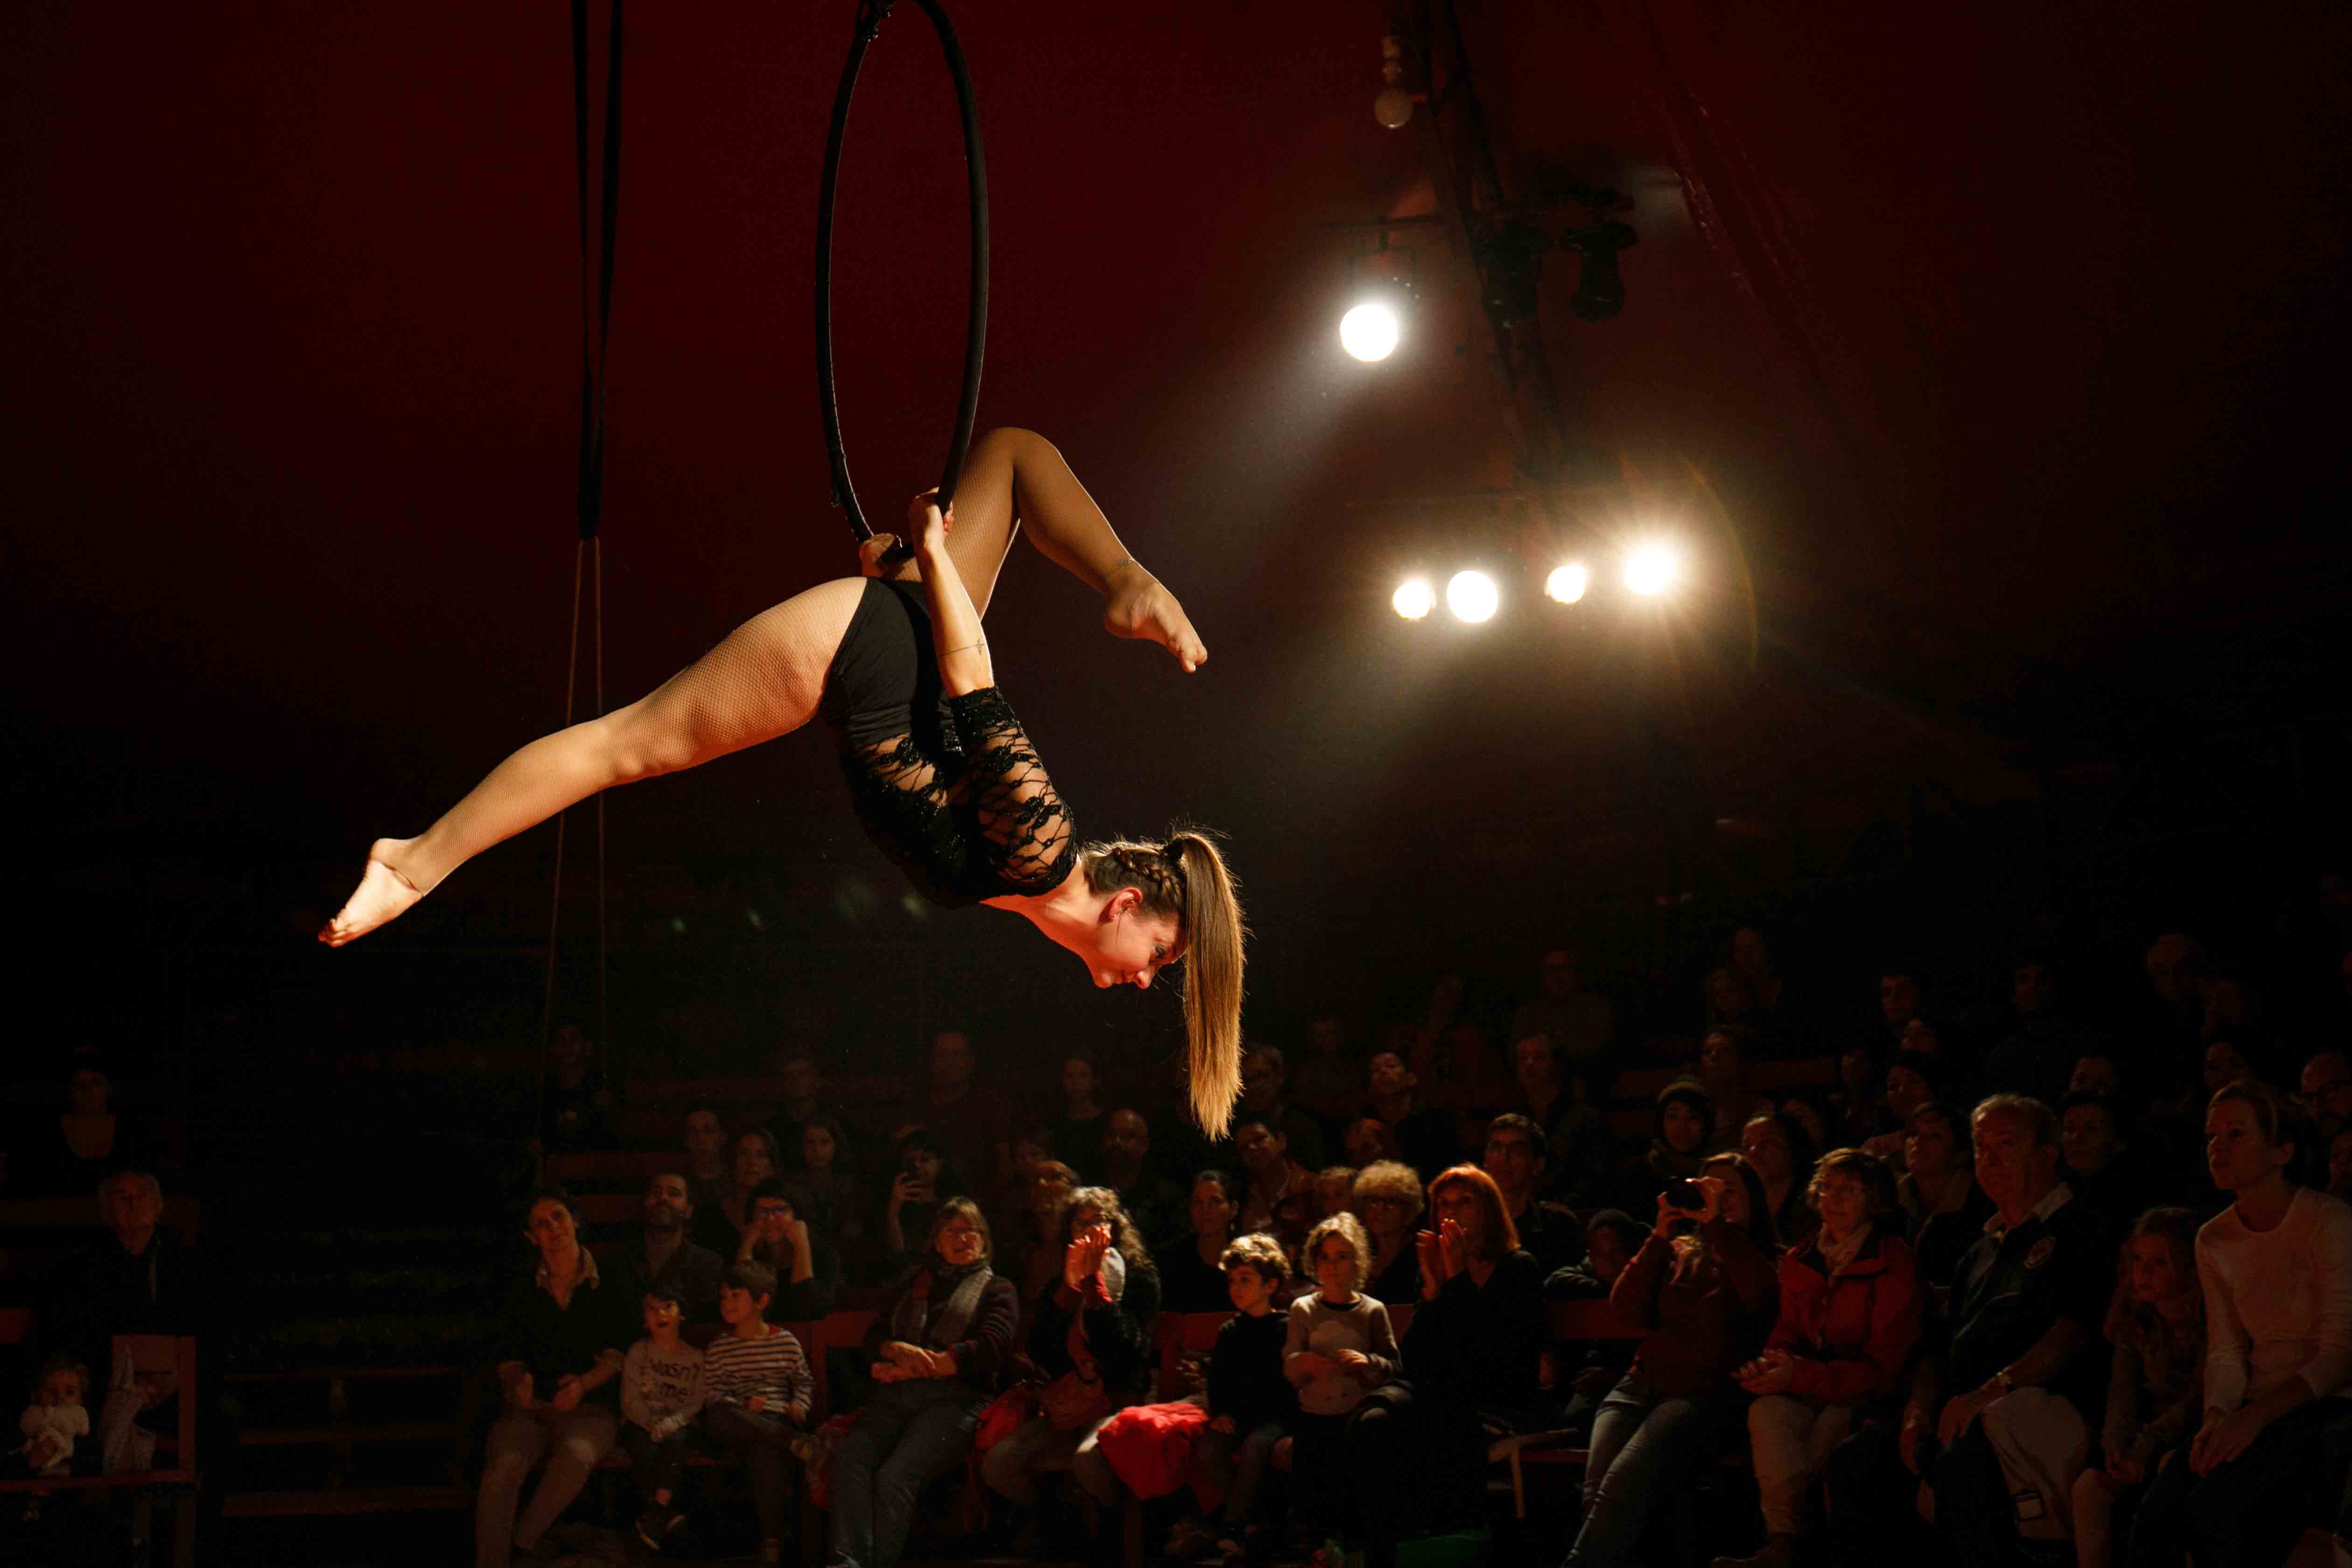 Romanès circus, 2017.